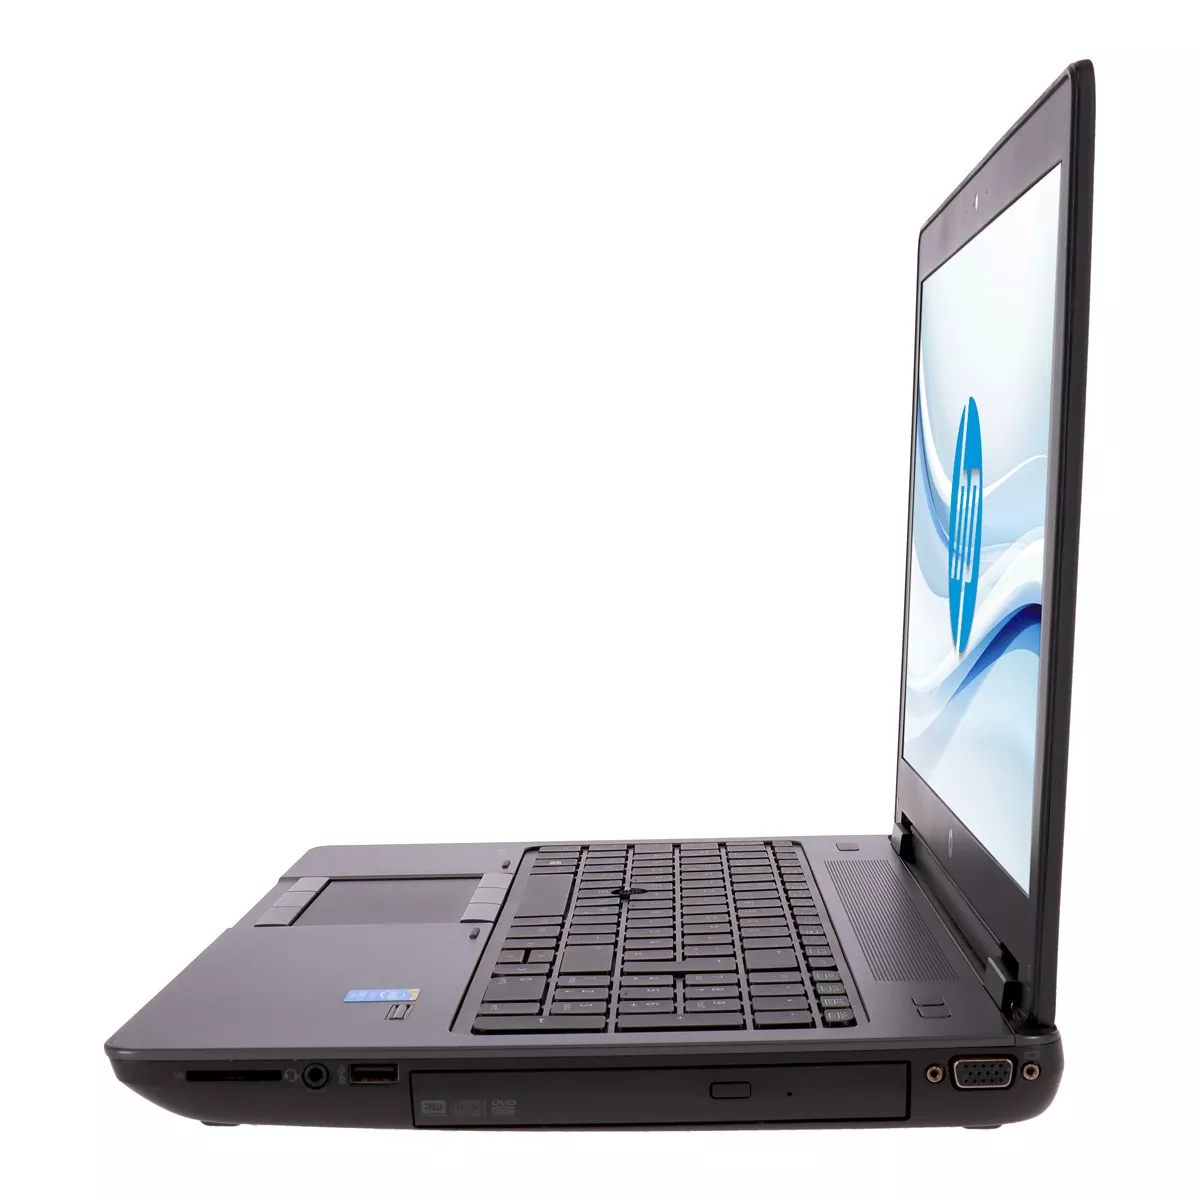 HP ZBook 15 G2 Core i7 4810MQ Full-HD nVidia Quadro K2100M 500 GB SSD Webcam